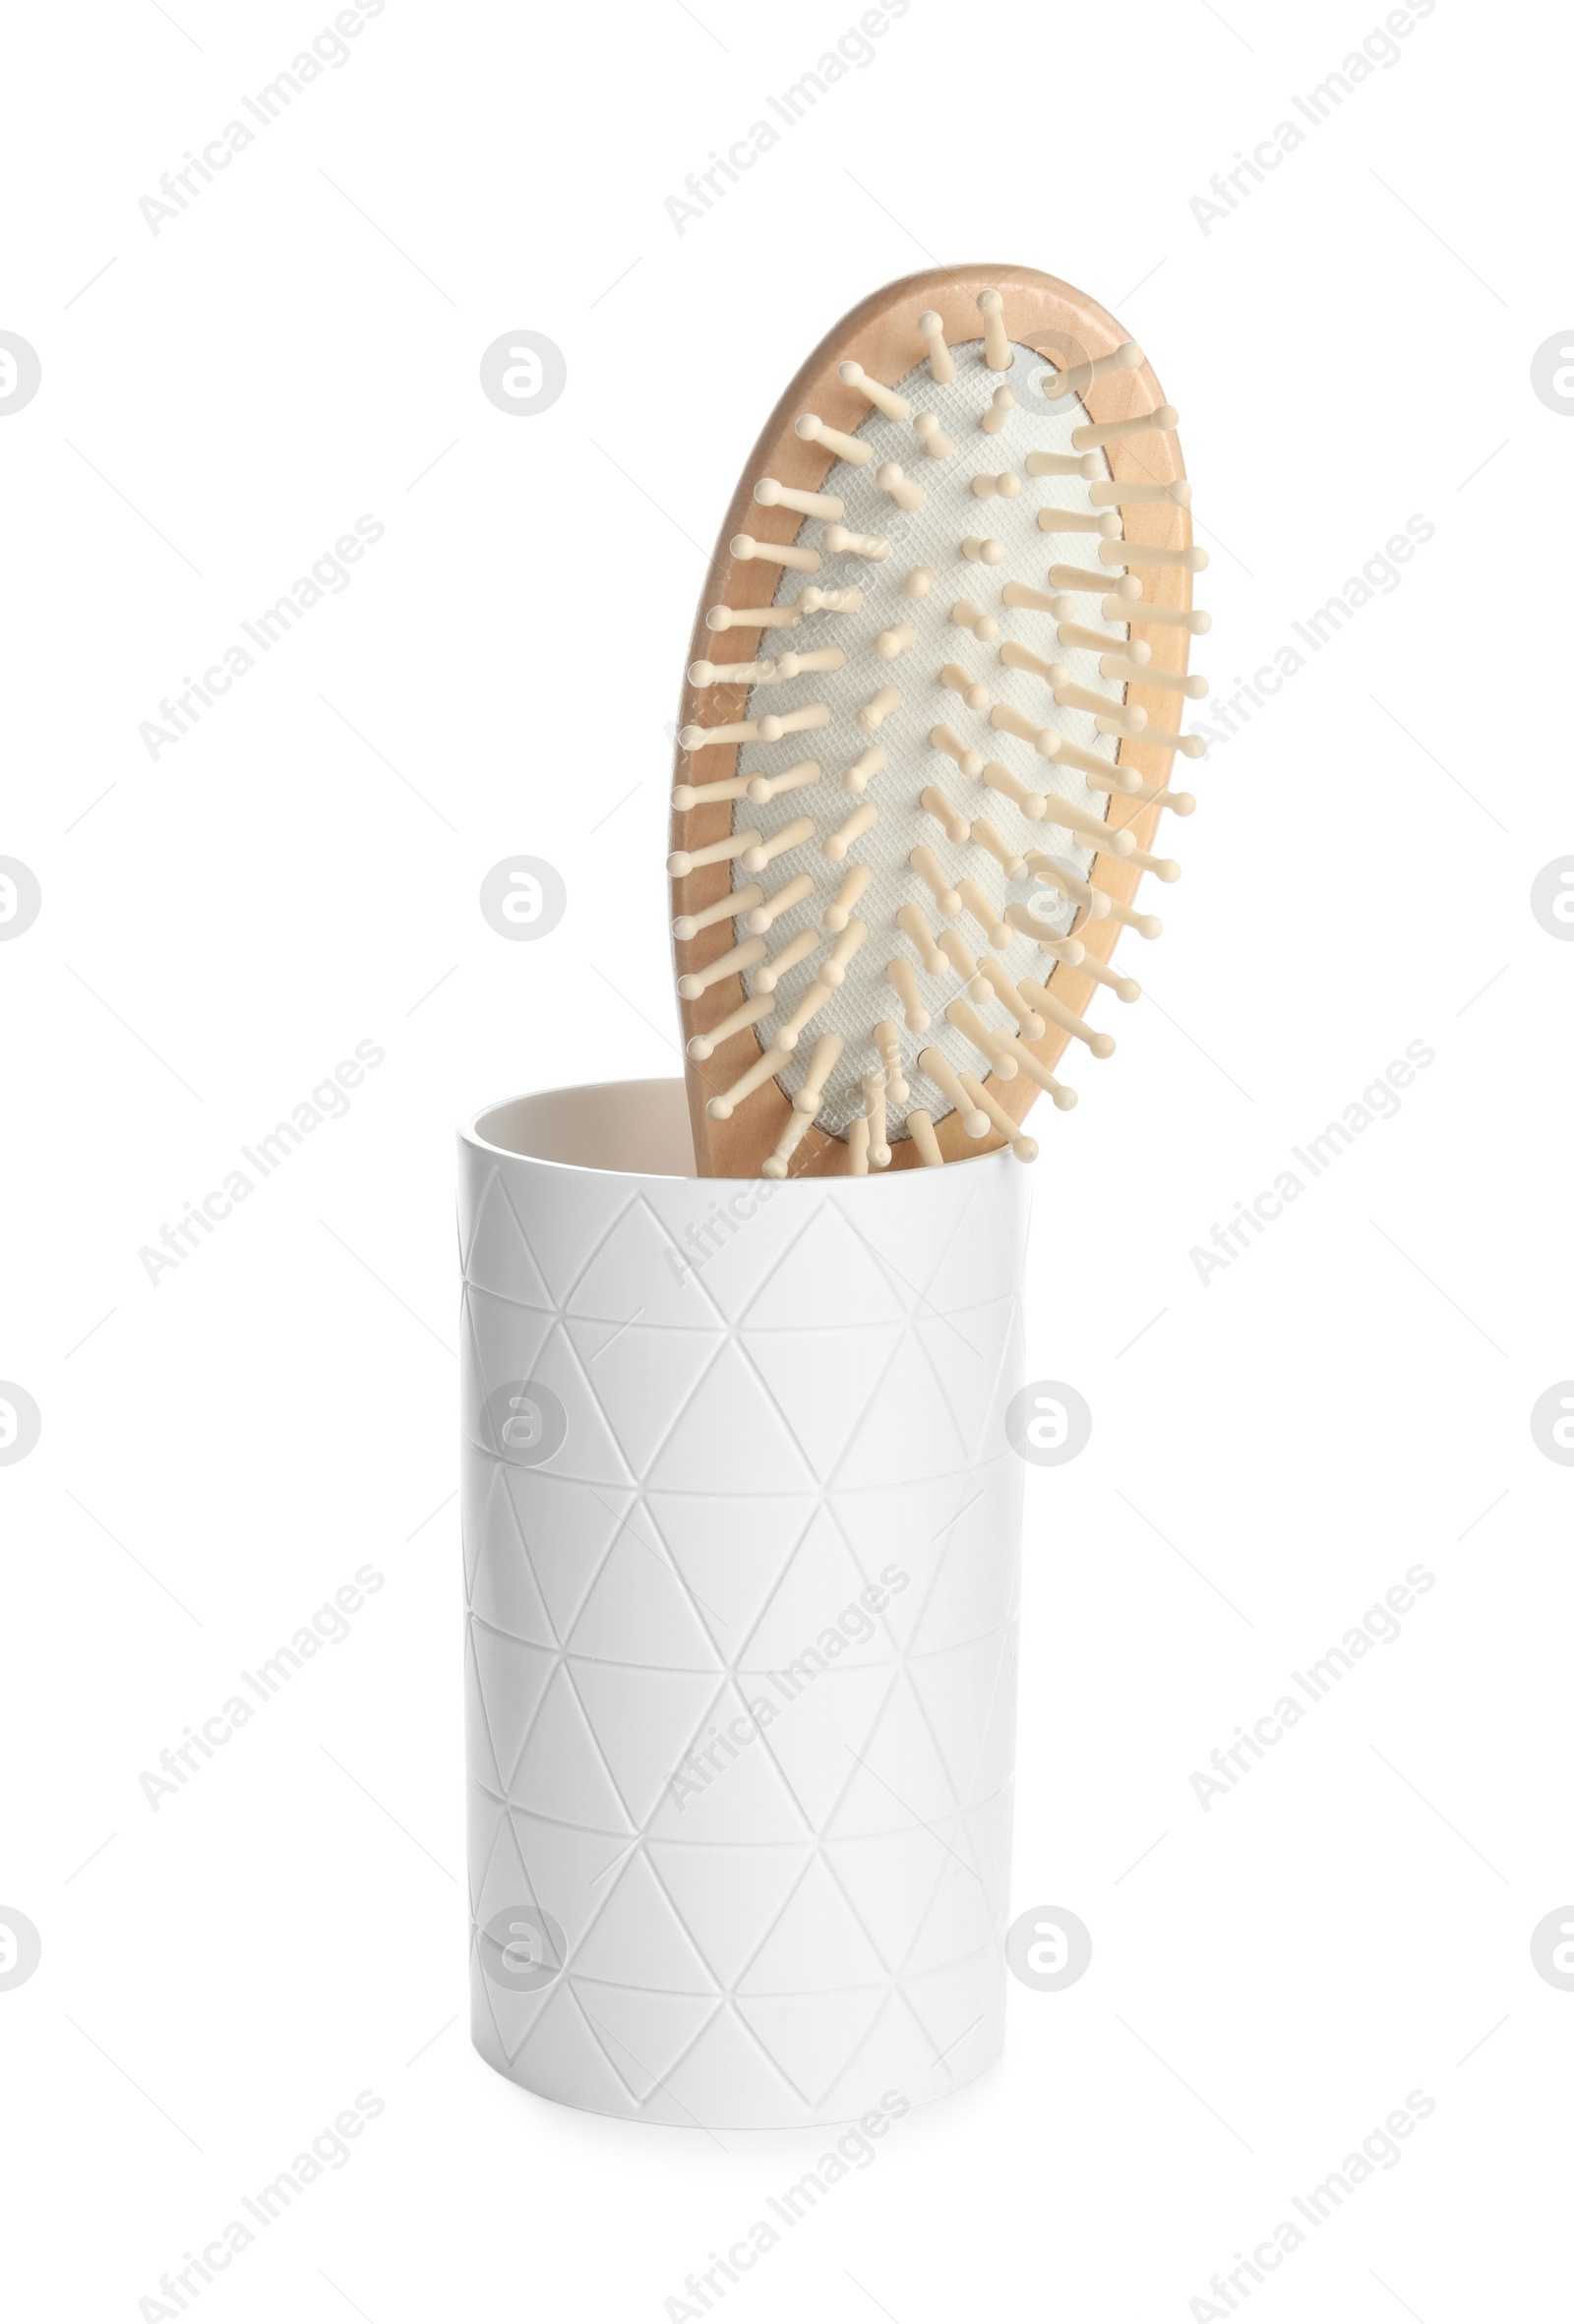 Photo of Wooden hair brush in ceramic holder isolated on white